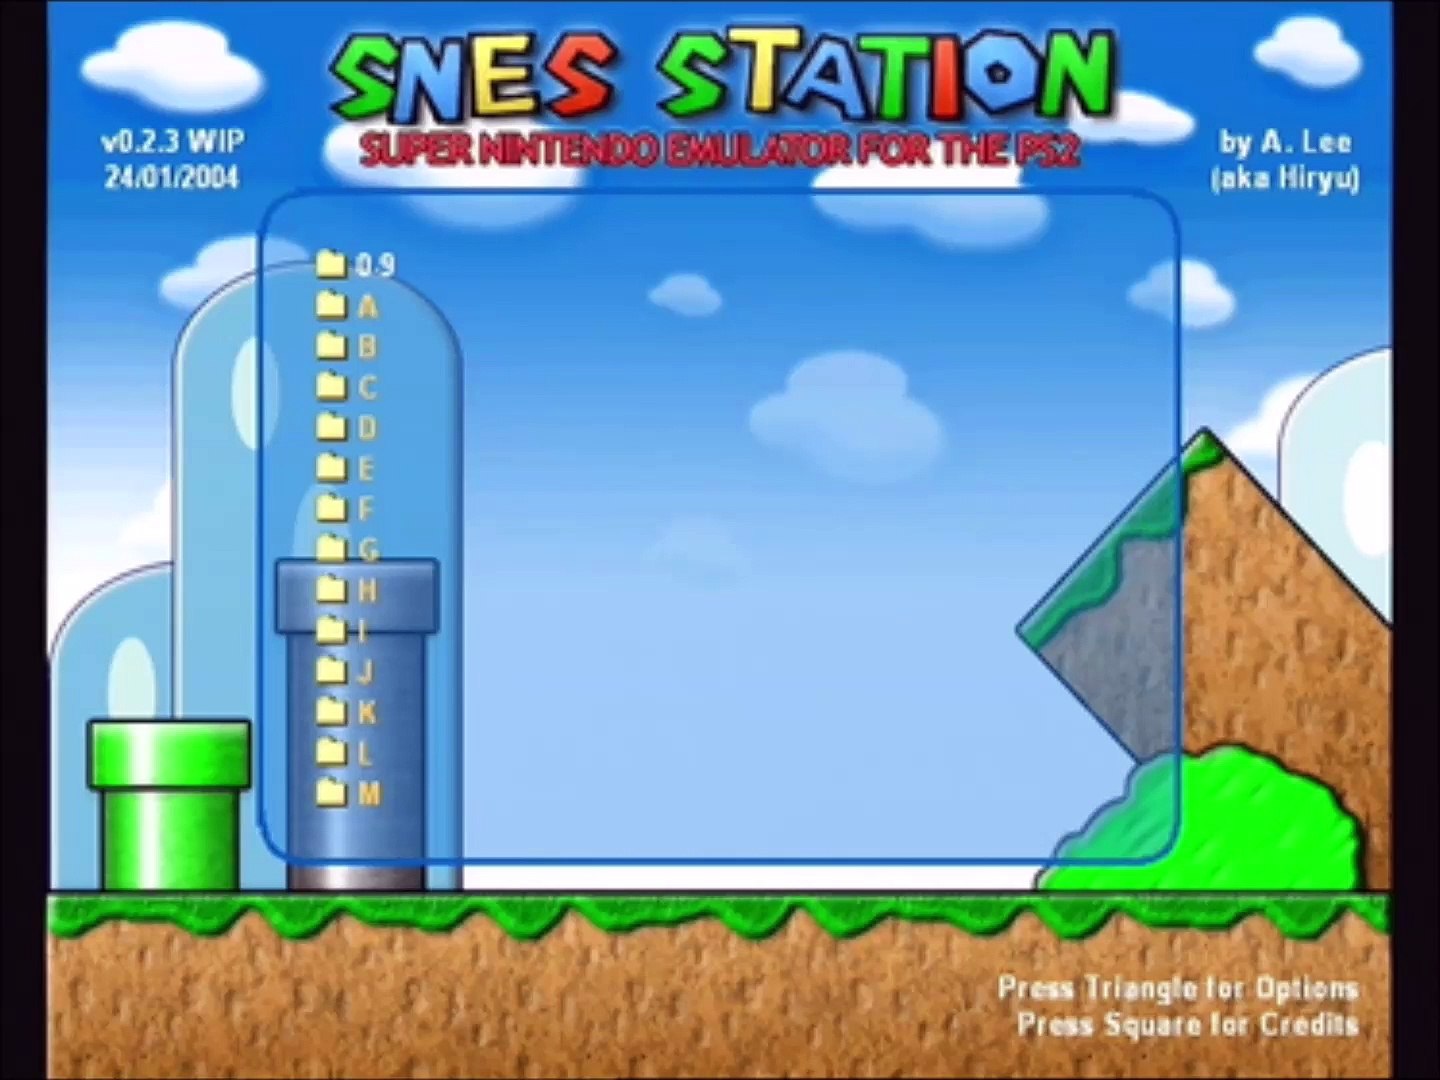 SNES STATION Menu Music - SUPER NINTENDO EMULATOR FOR THE PS2 - Vídeo  Dailymotion